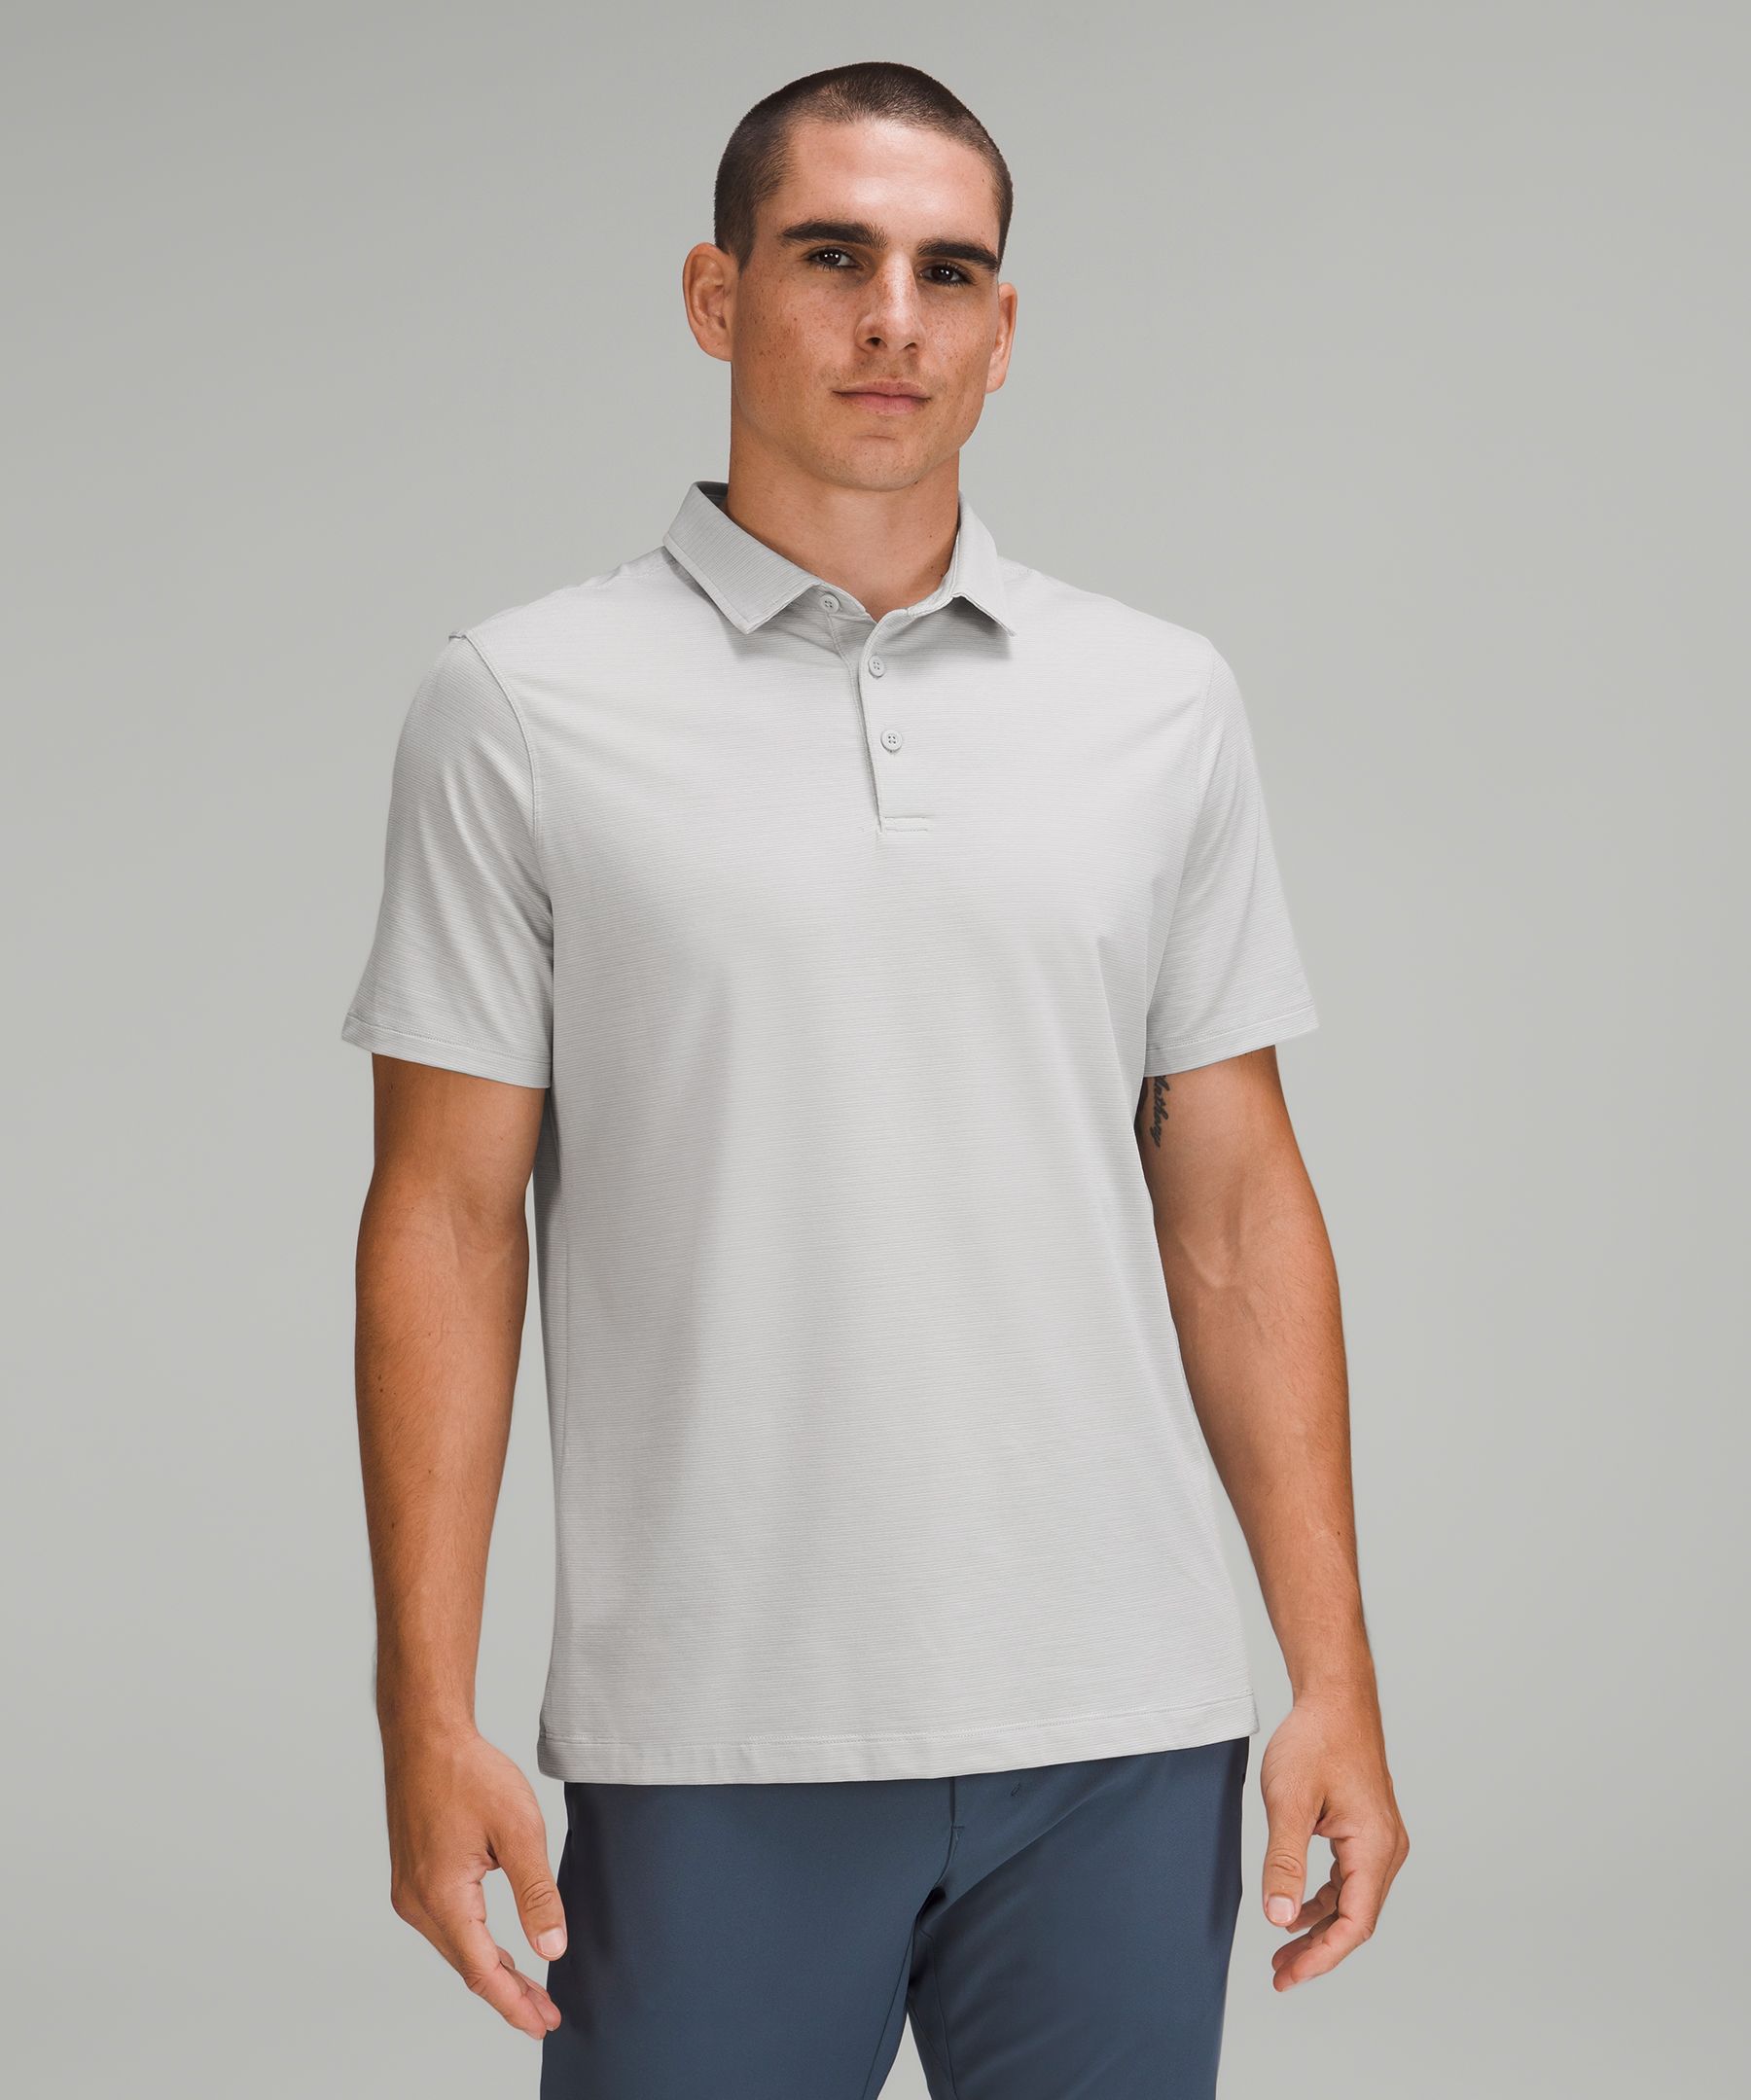 Lululemon Evolution Short Sleeve Polo Shirt In Commission Stripe Seal Grey White